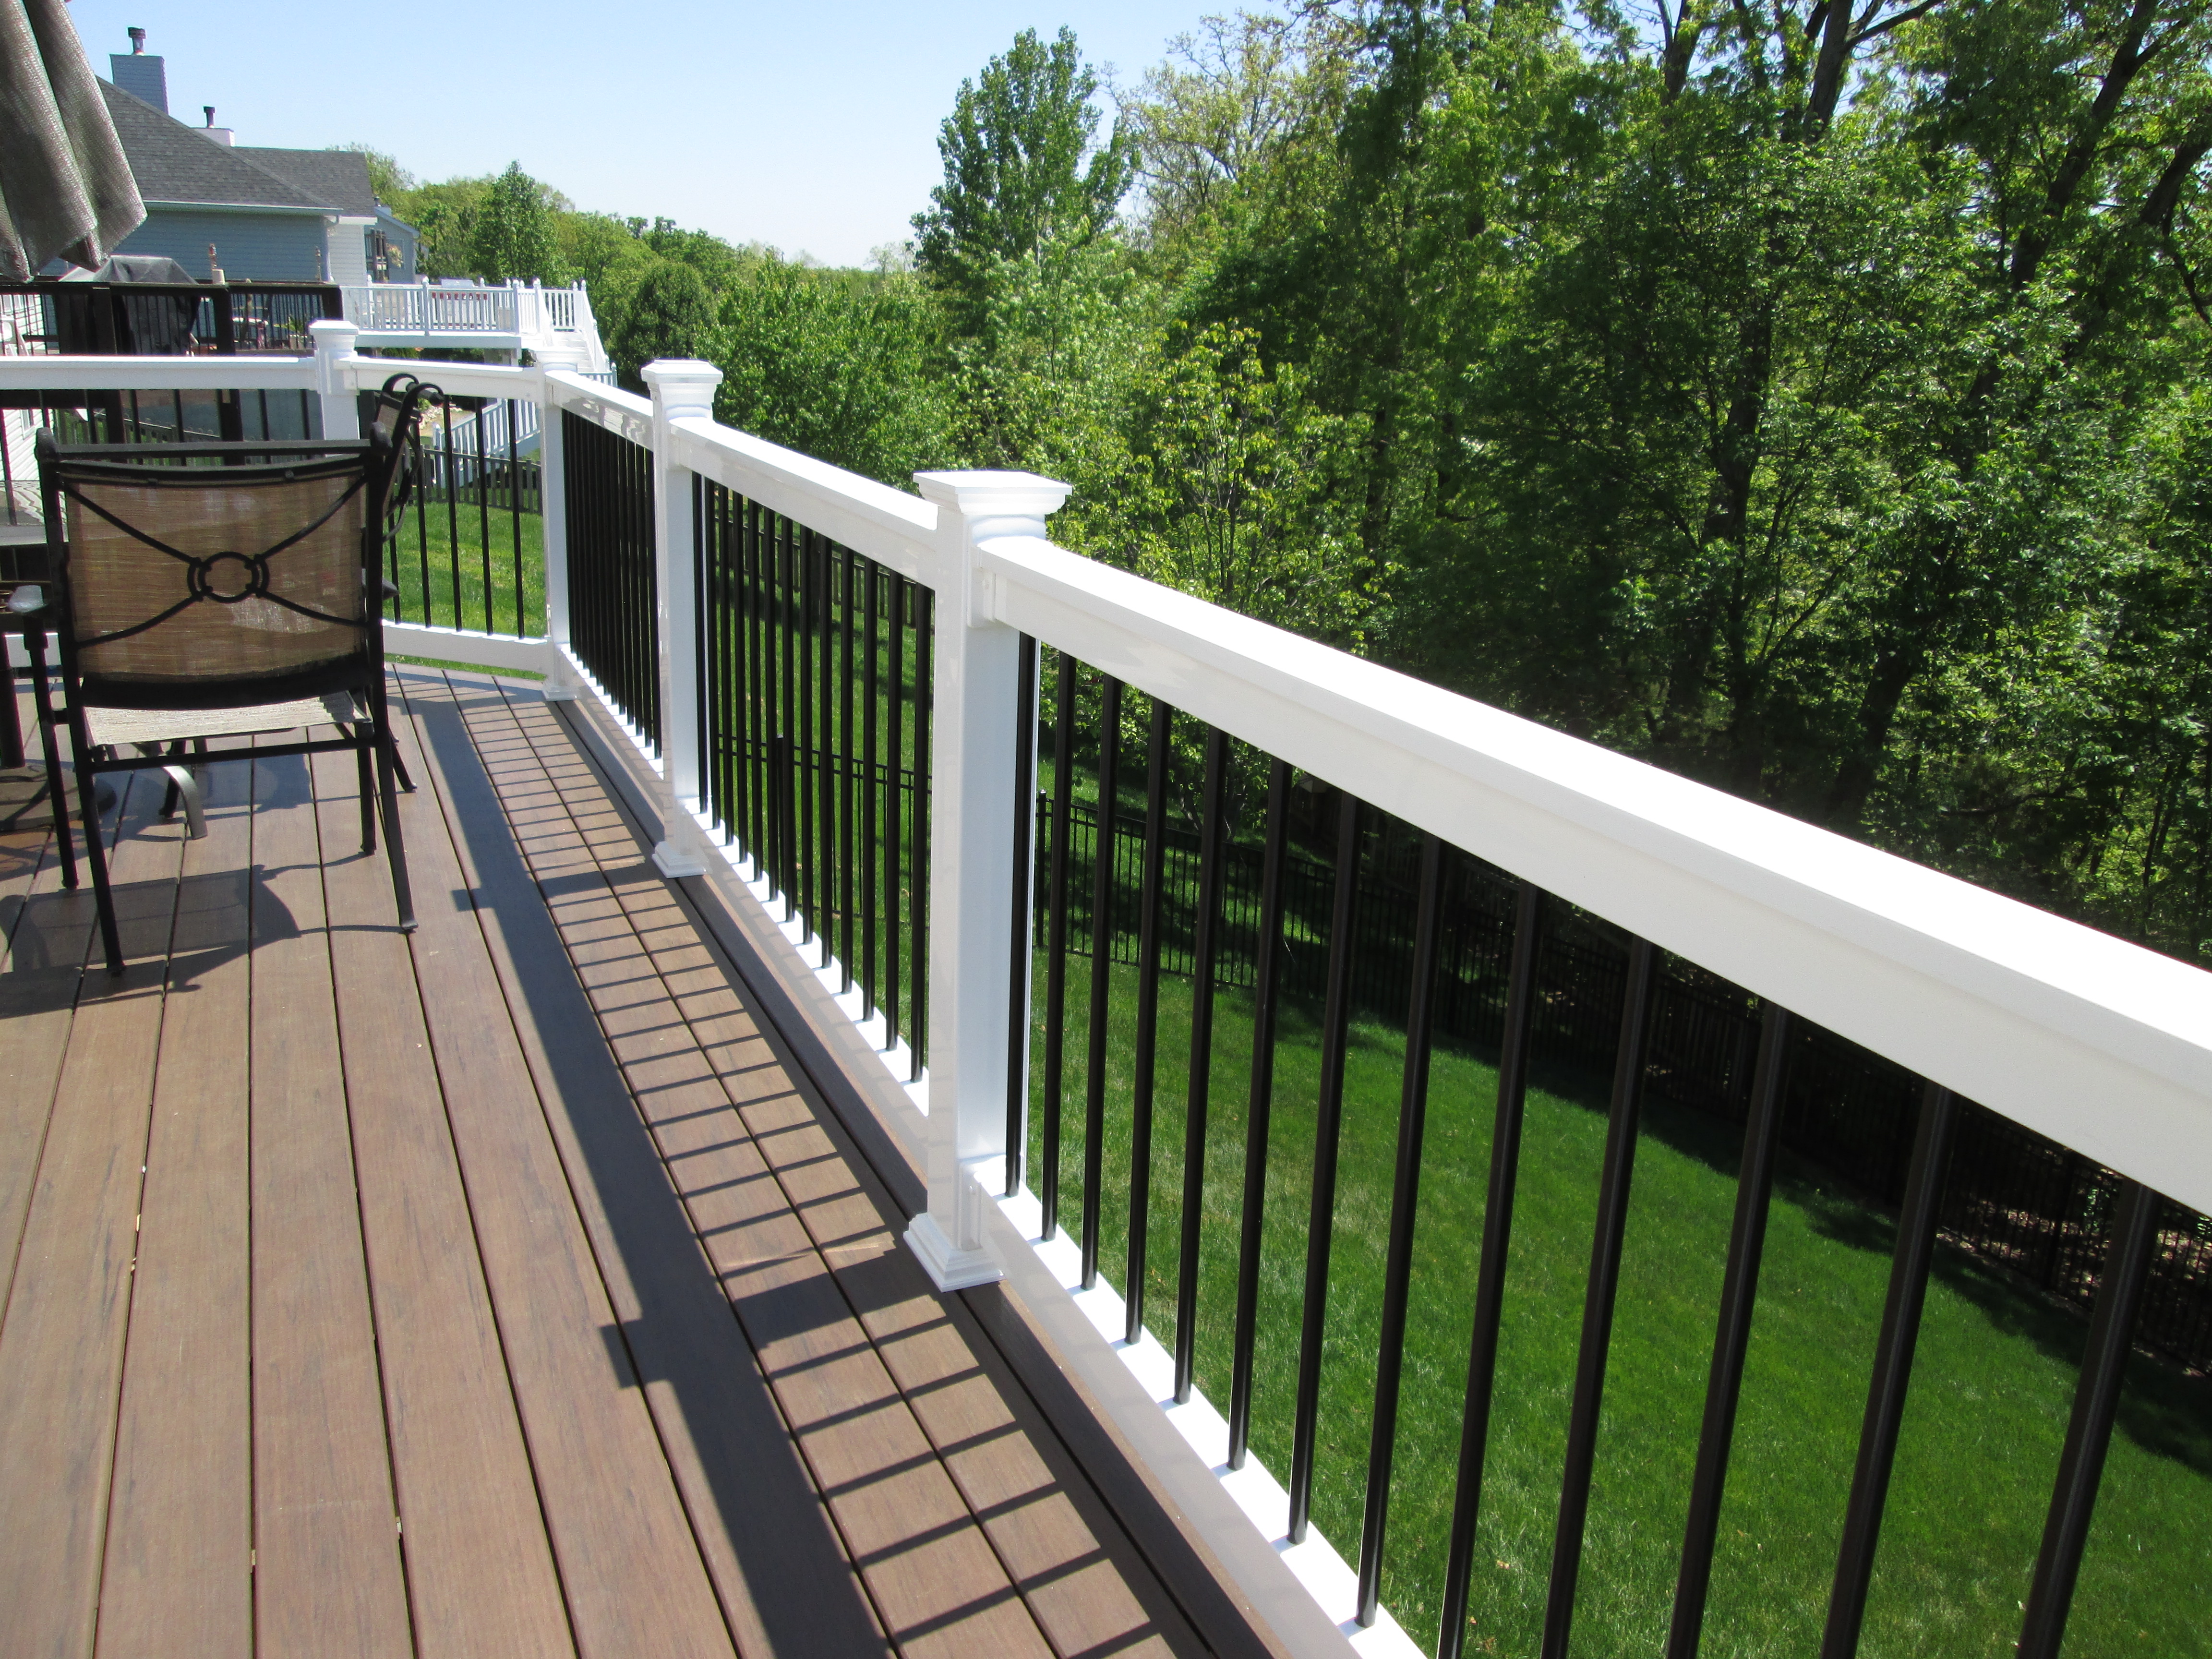 St. Louis Decks: How To Hire A Deck Building Contractor | St. Louis decks, screened porches ...